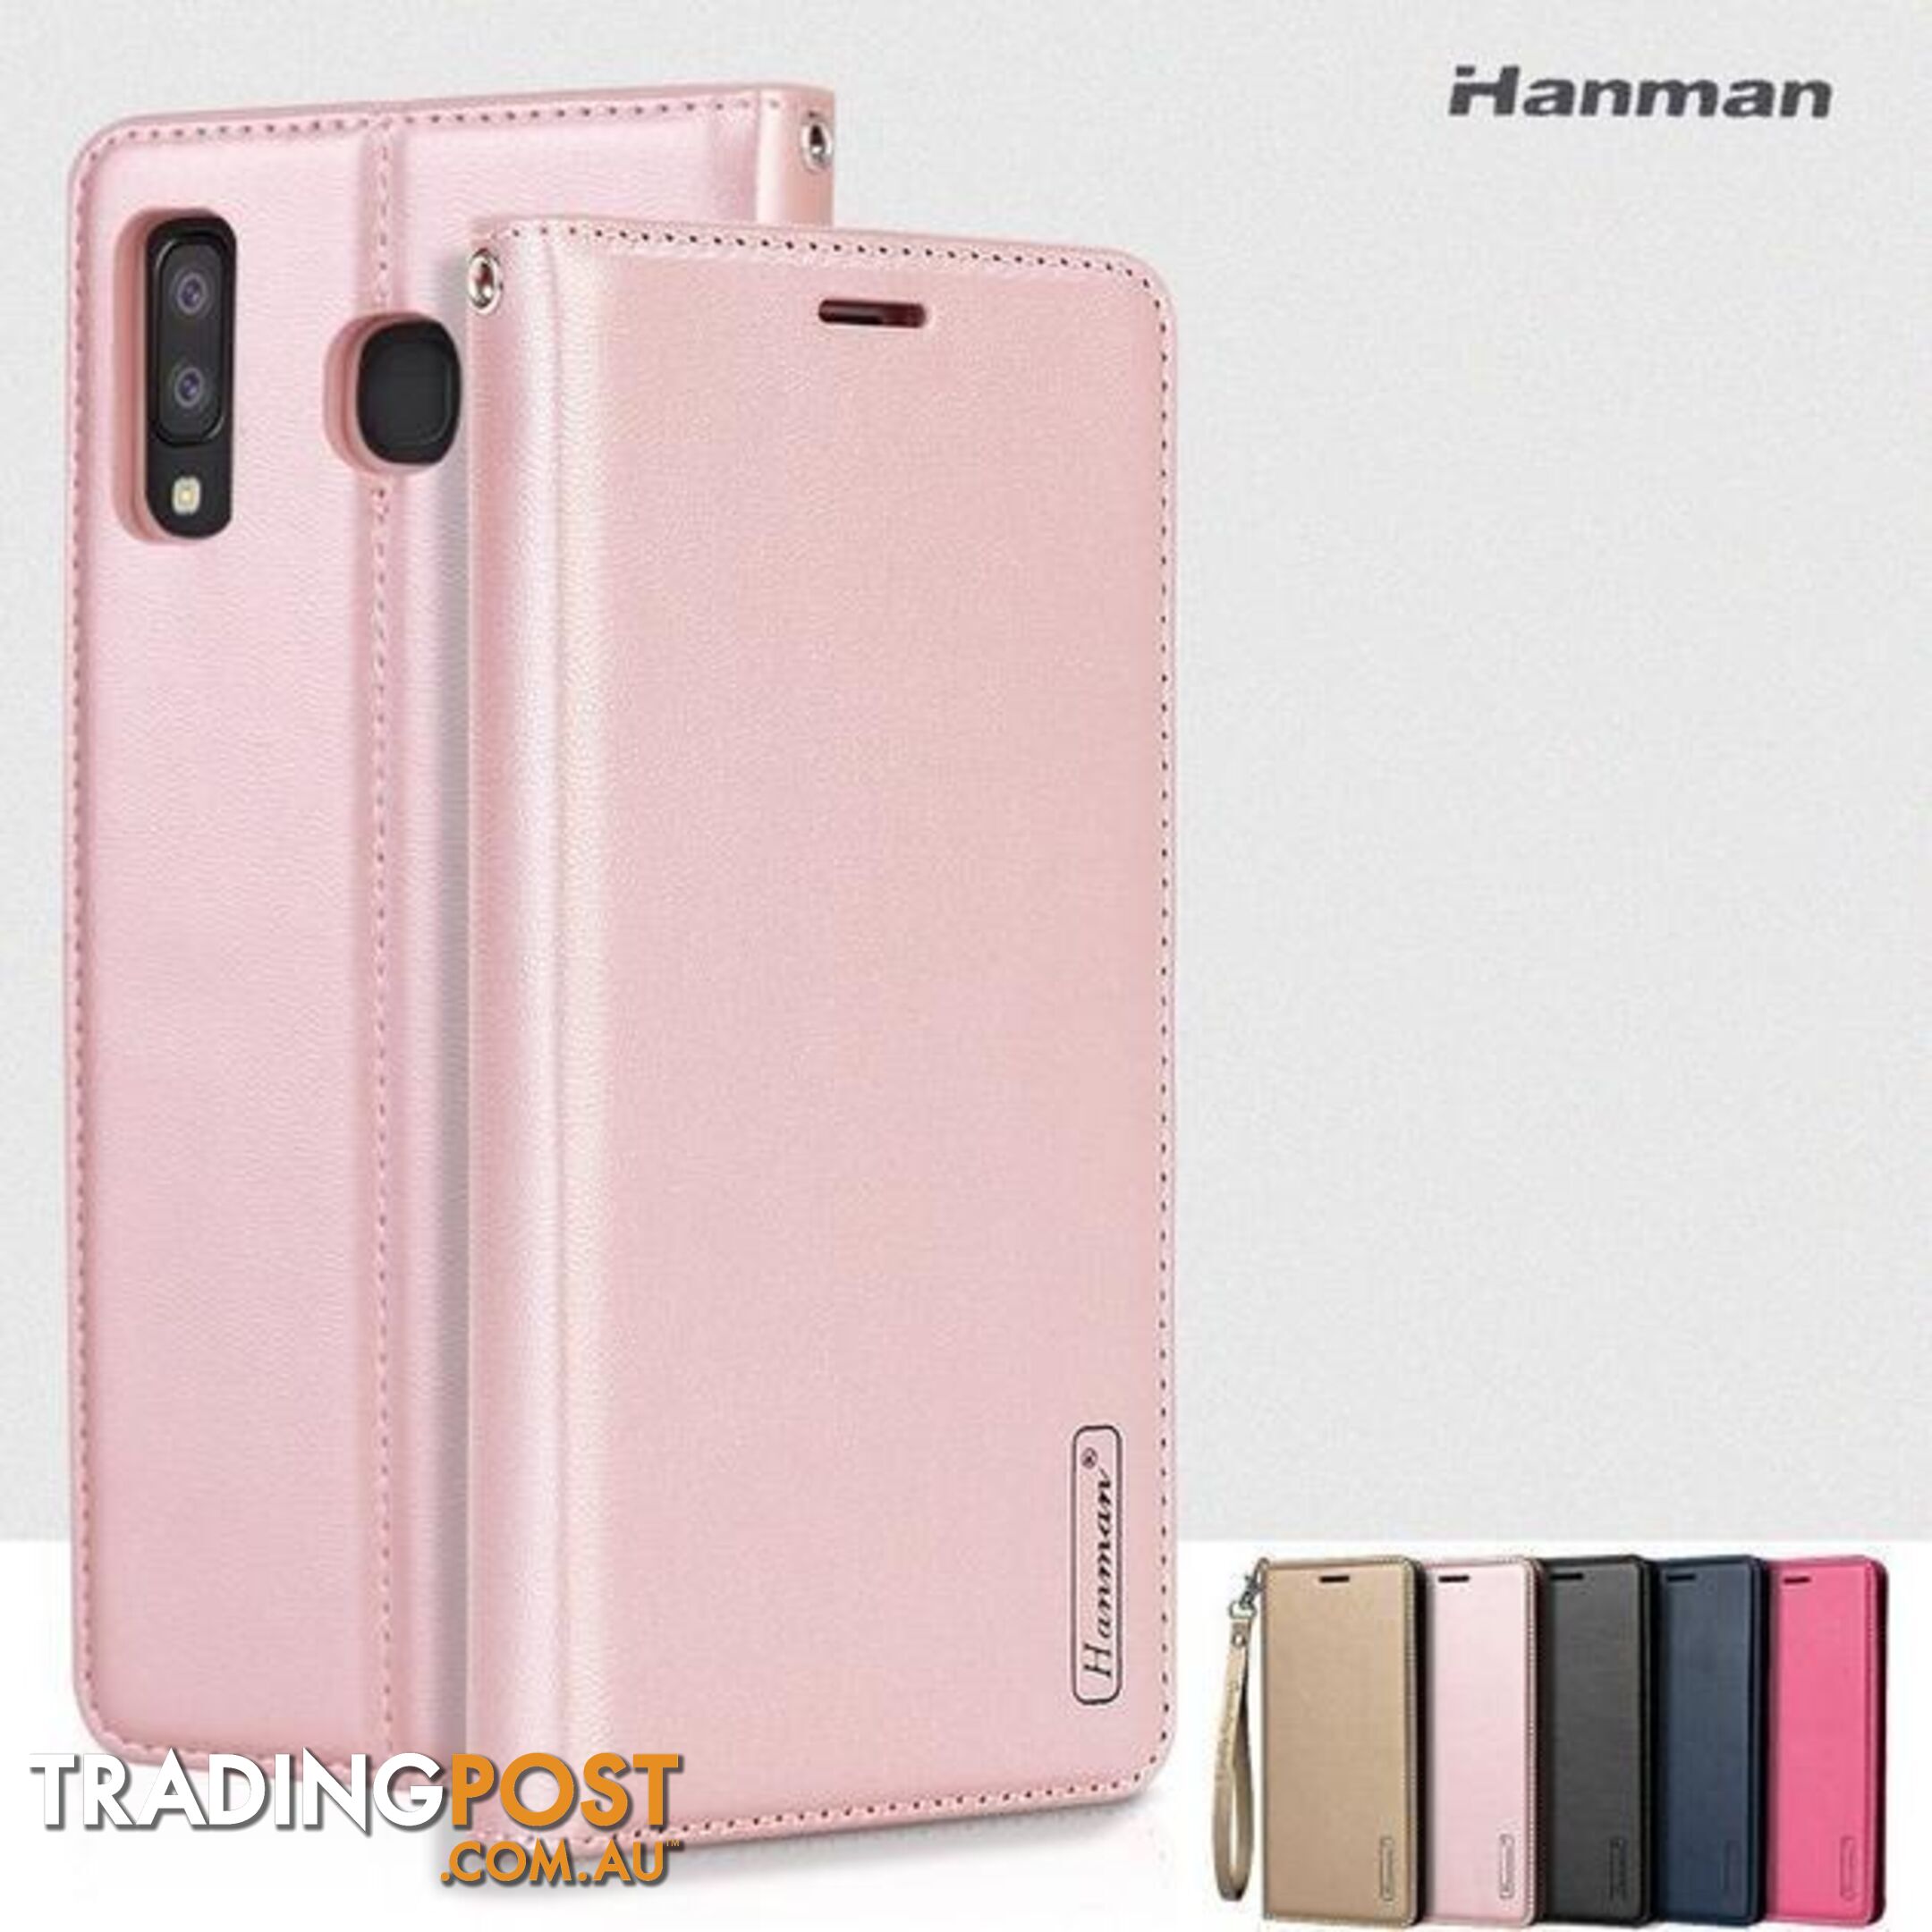 Samsung Galaxy Hanman Wallet Style Cases - 1001621 - Cases